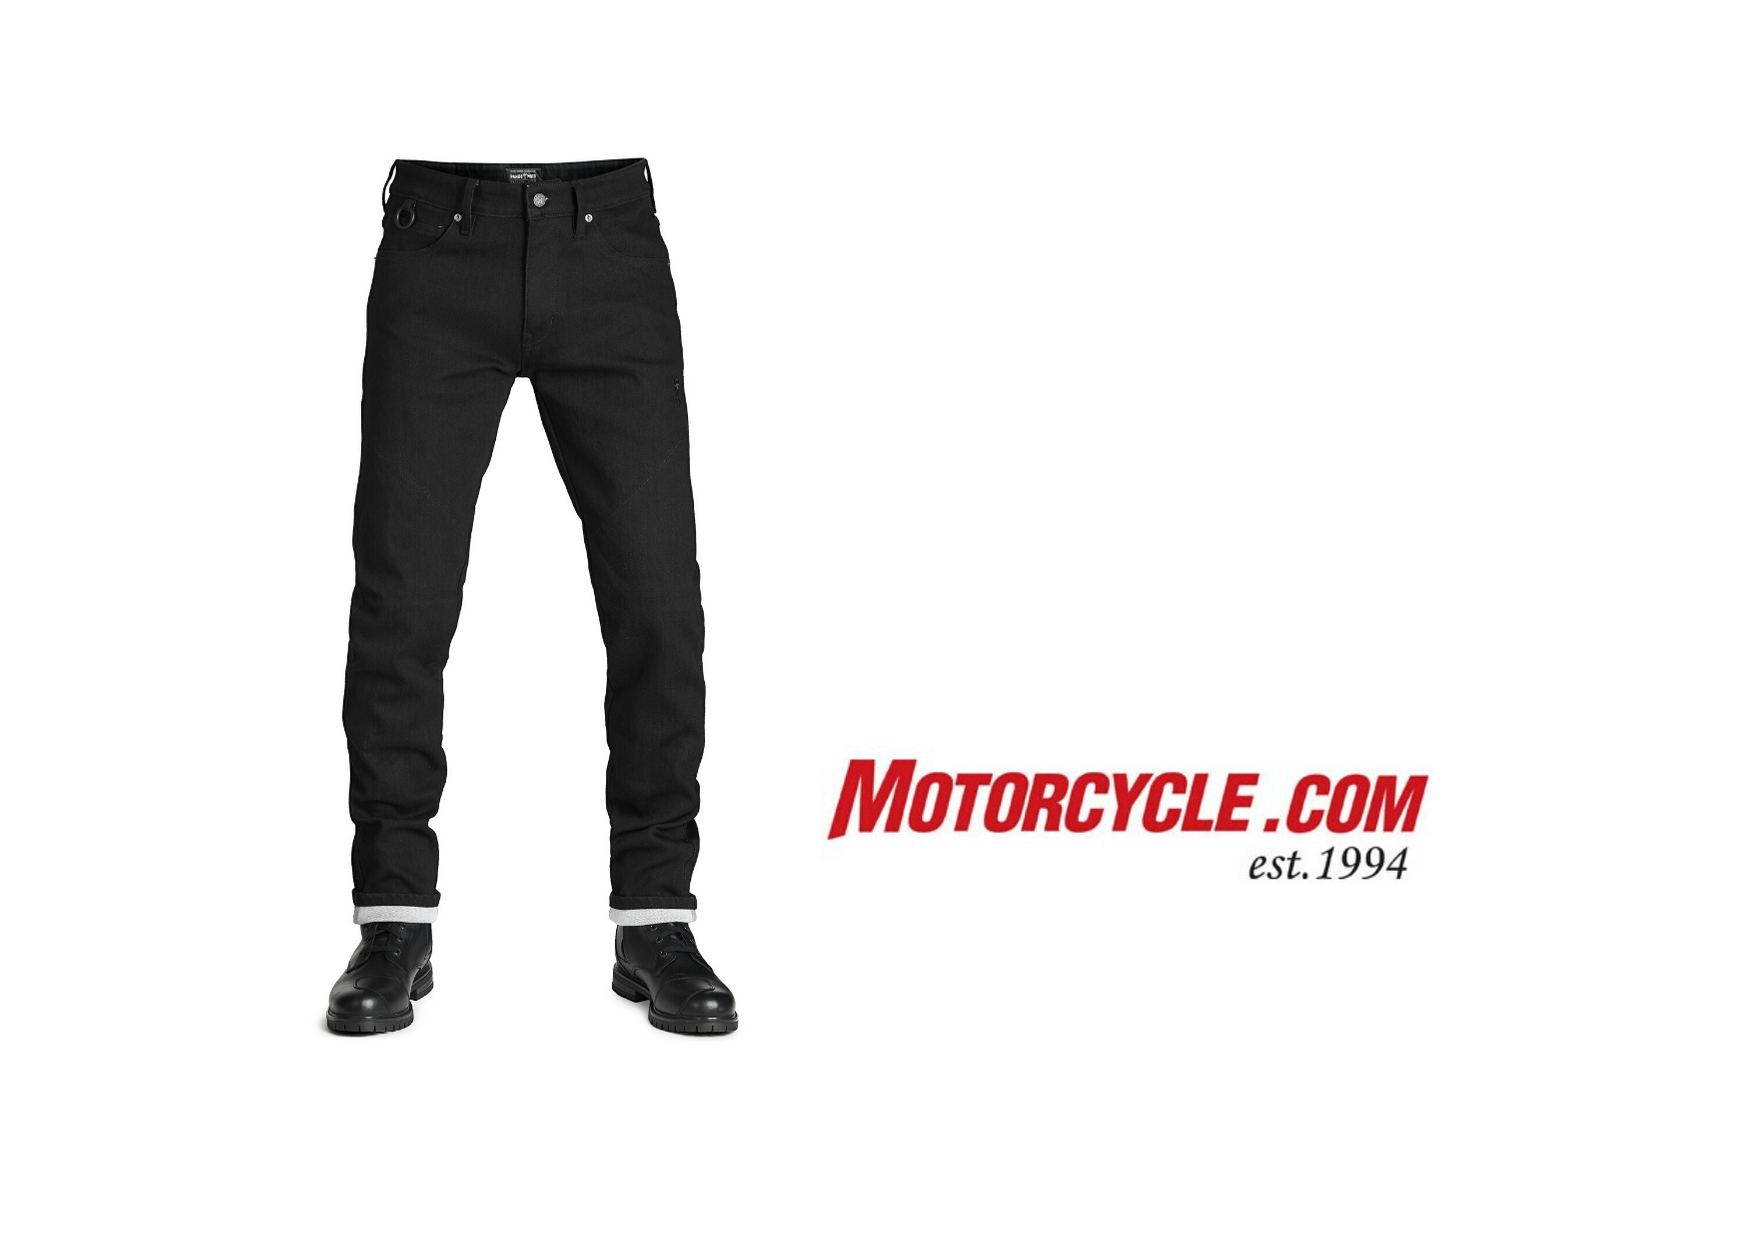 Pando Moto Steel Black Jeans in front